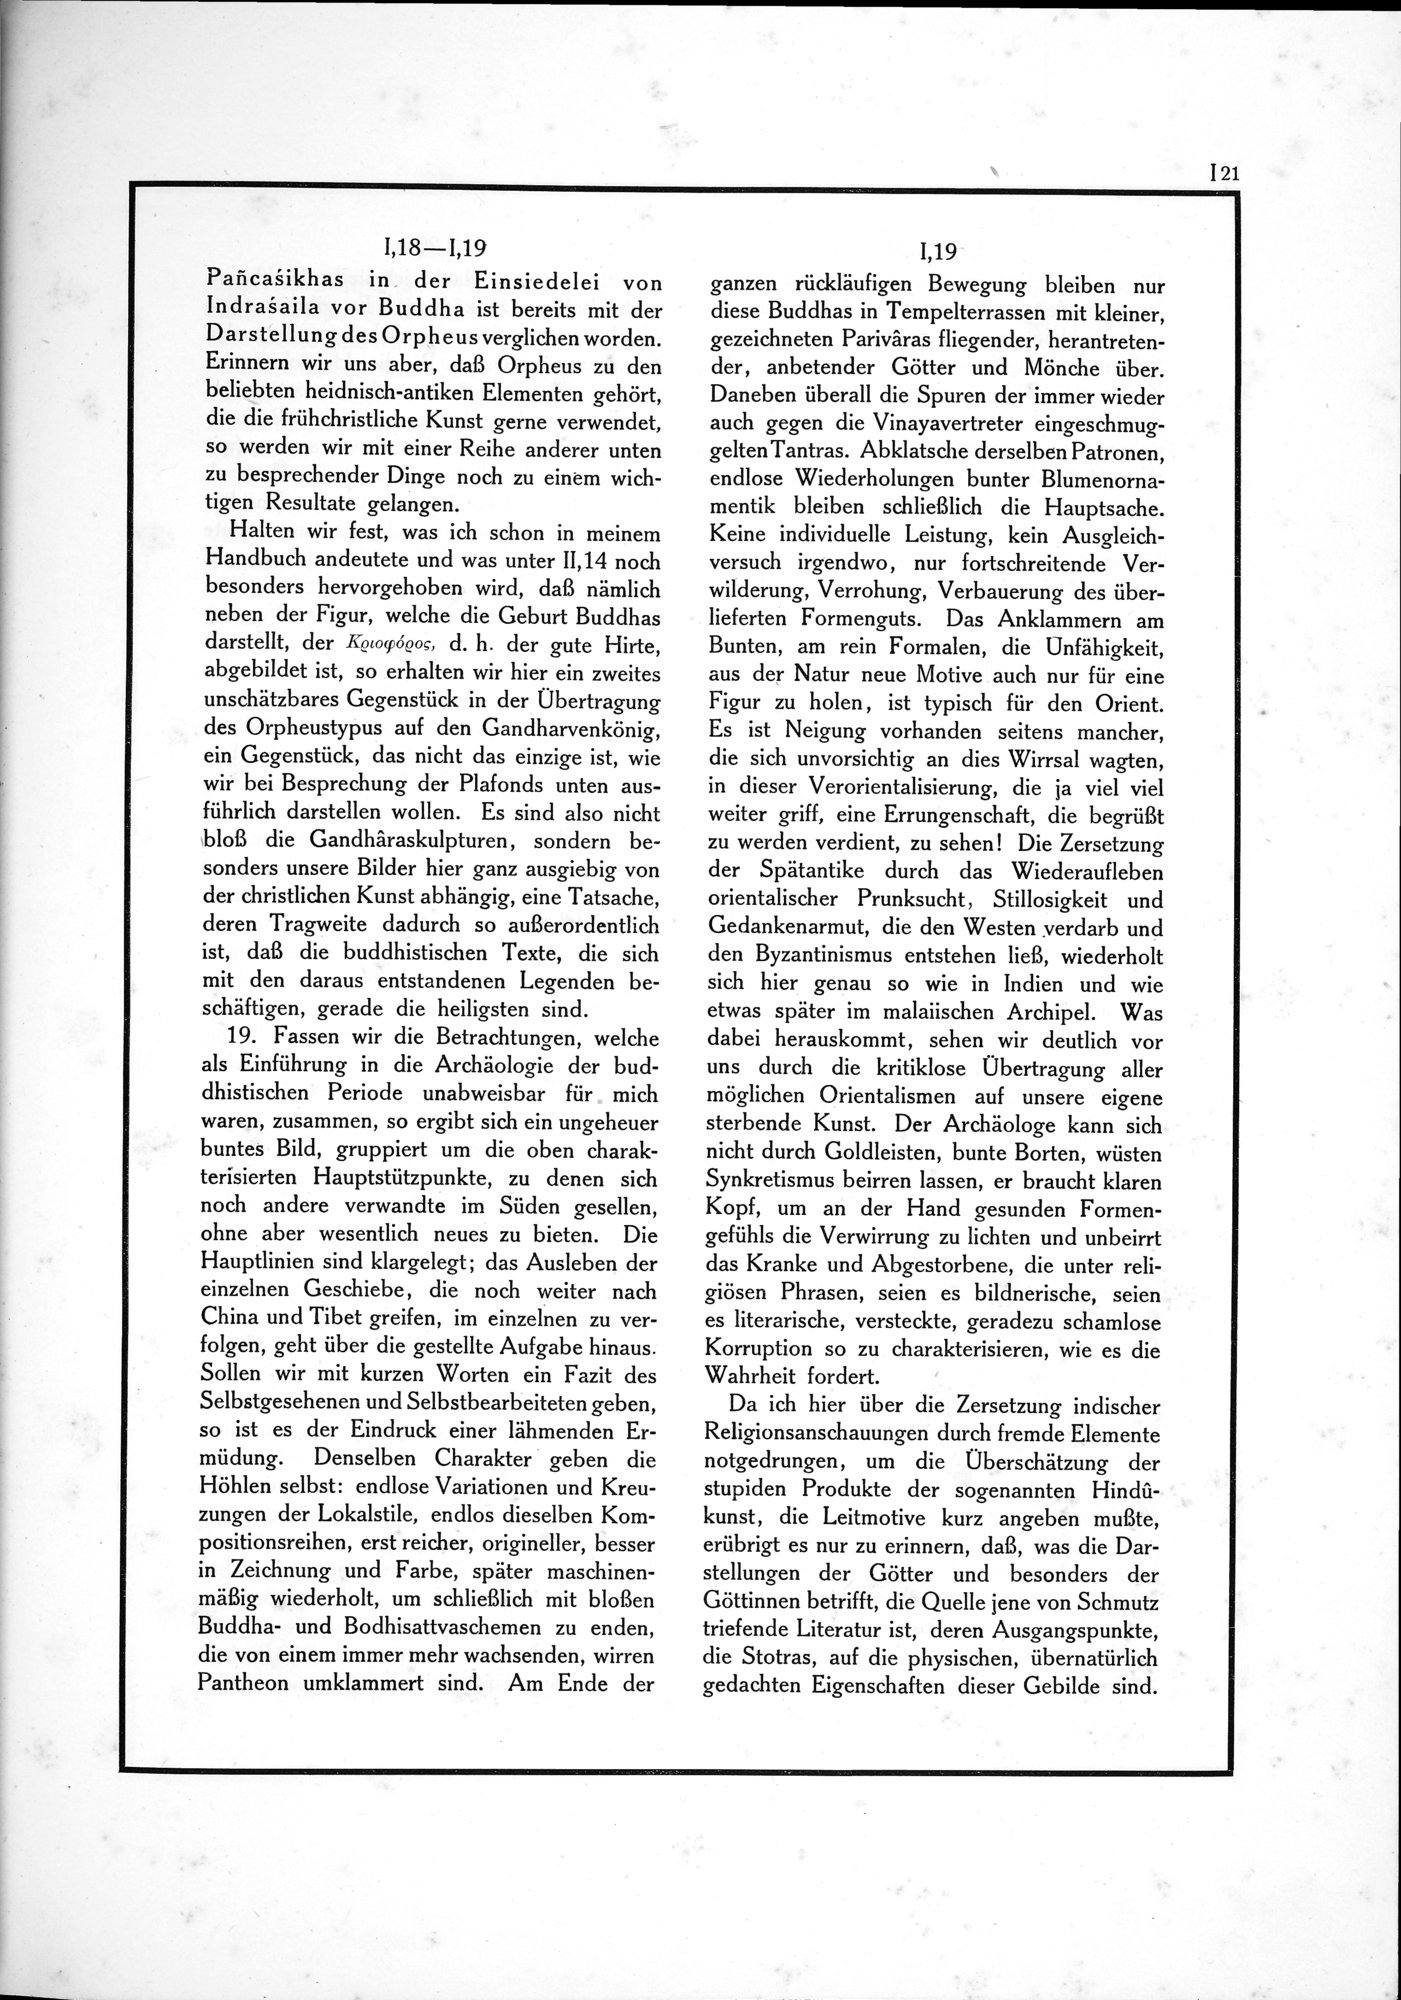 Alt-Kutscha : vol.1 / Page 33 (Grayscale High Resolution Image)